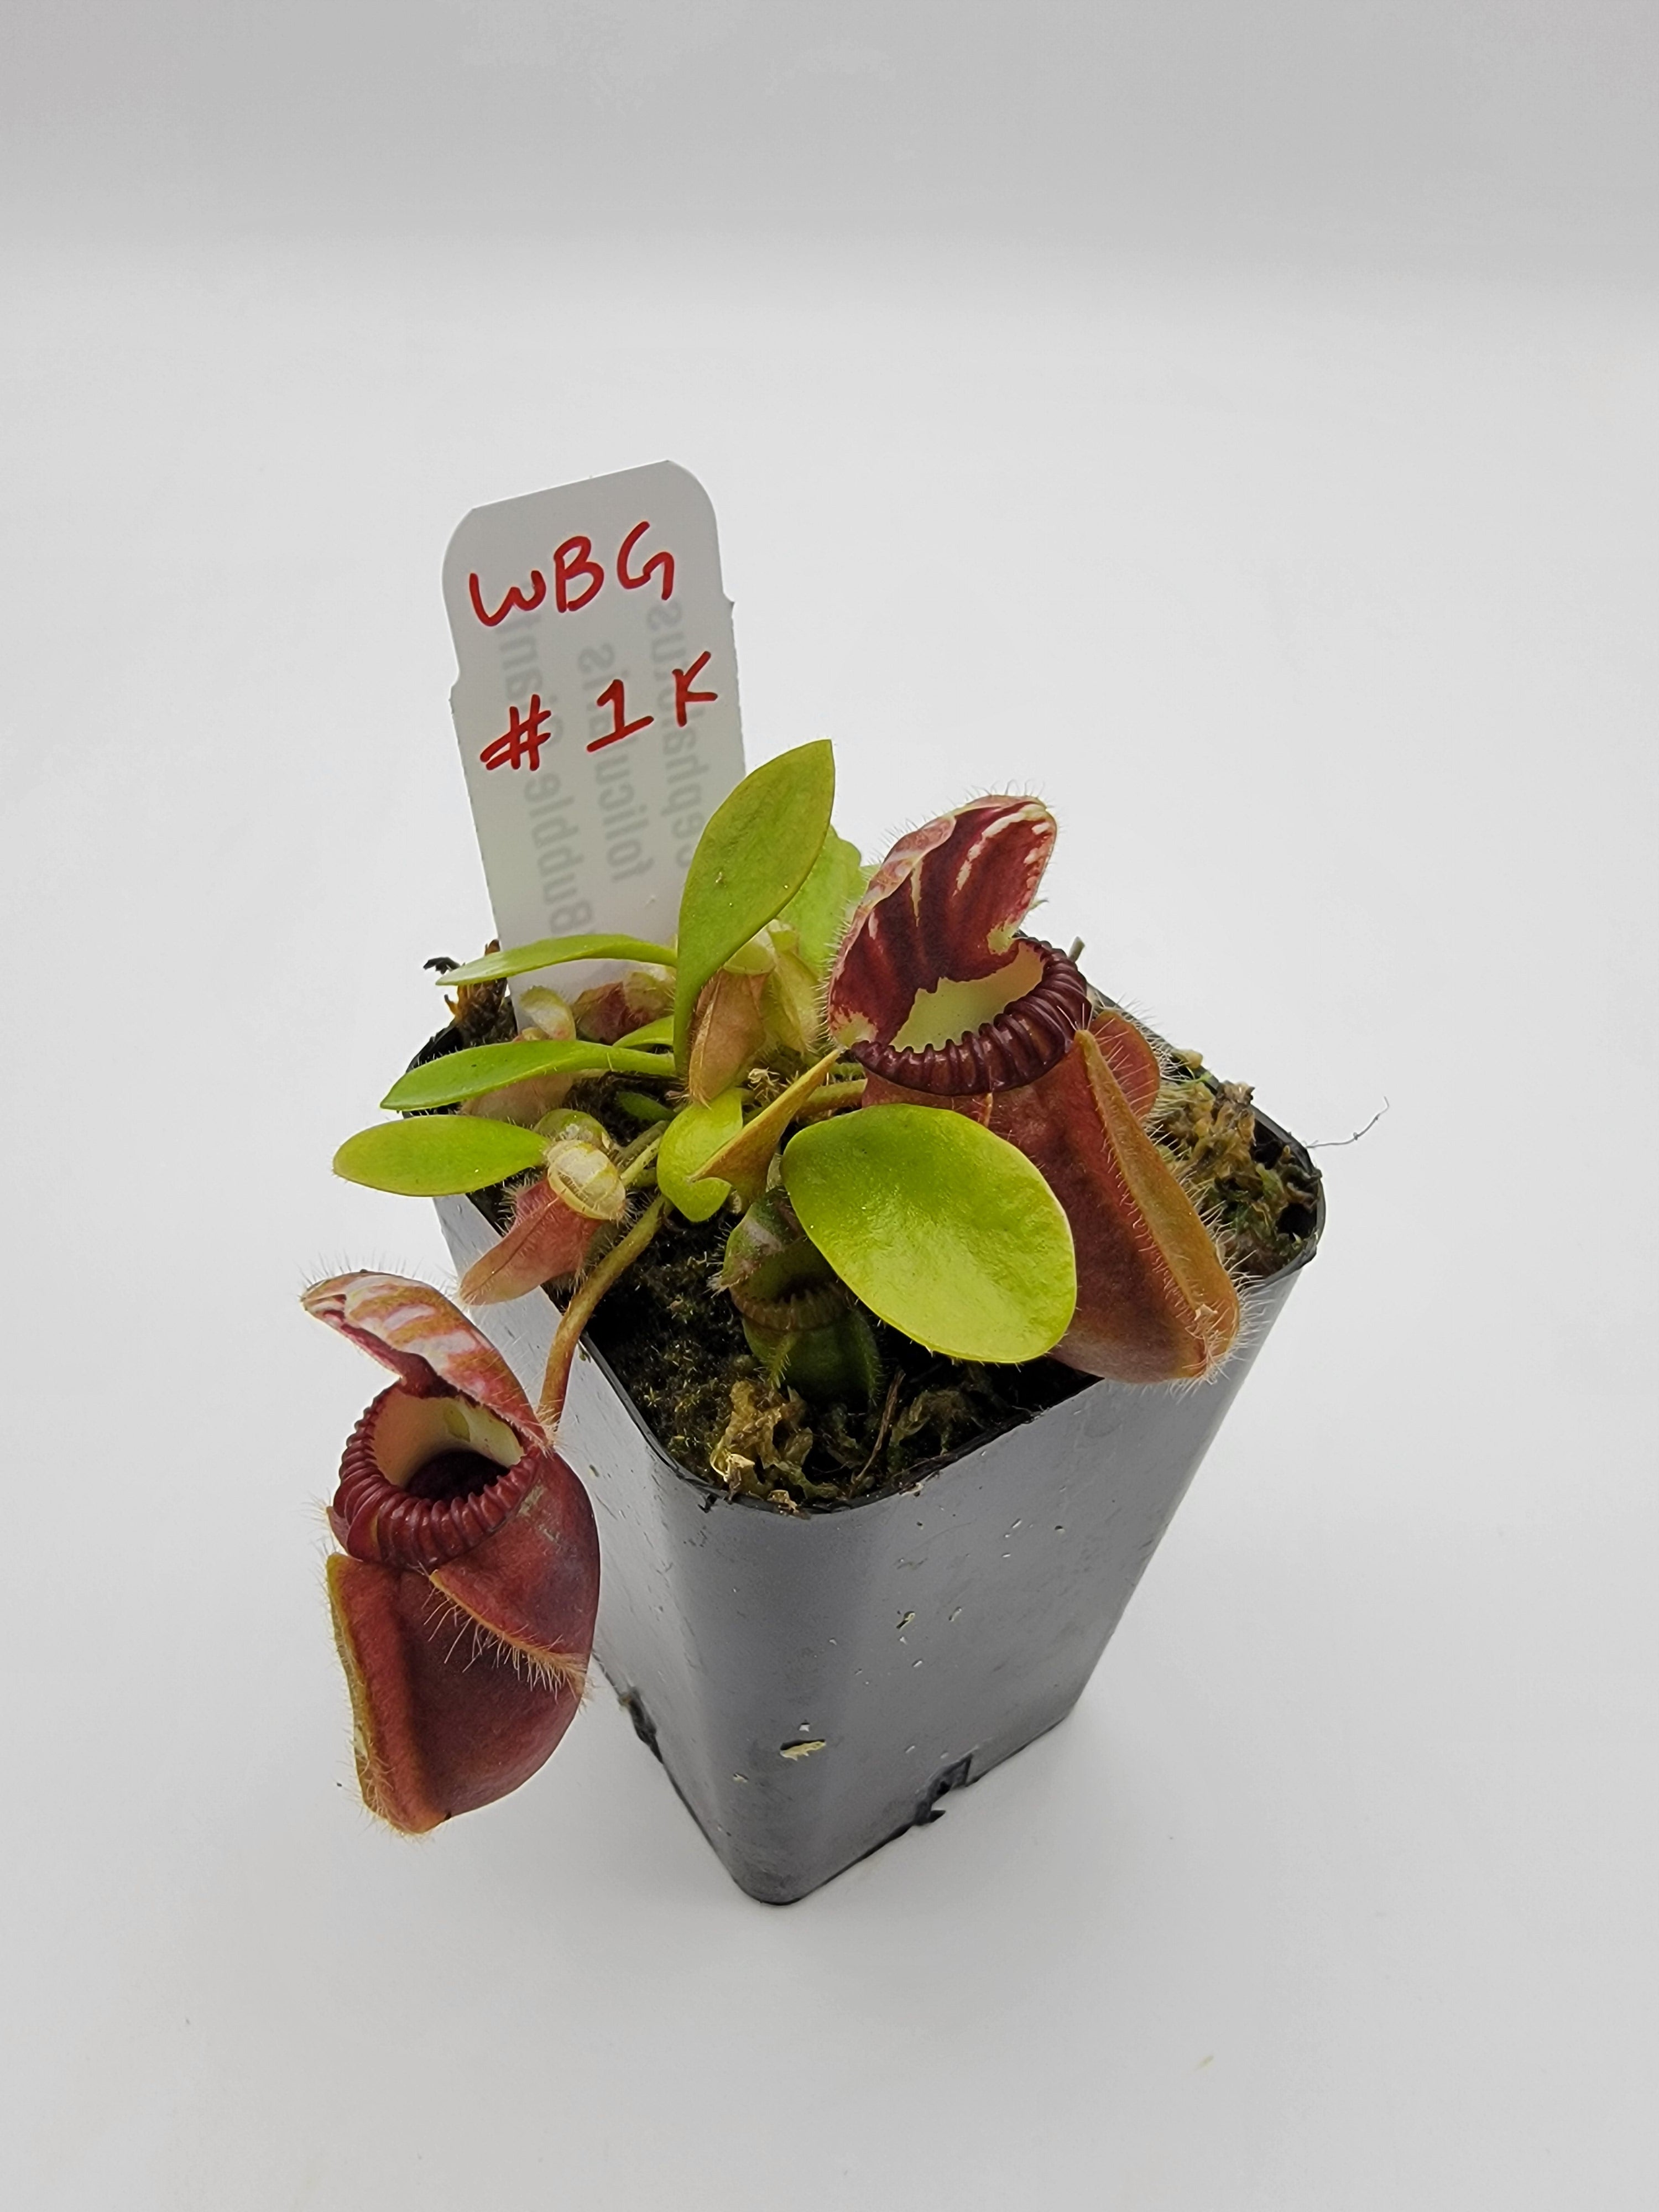 Cephalotus follicularis "Bubble Giant" WBG (1K-9K) - Rainbow Carnivorous Plants LLC